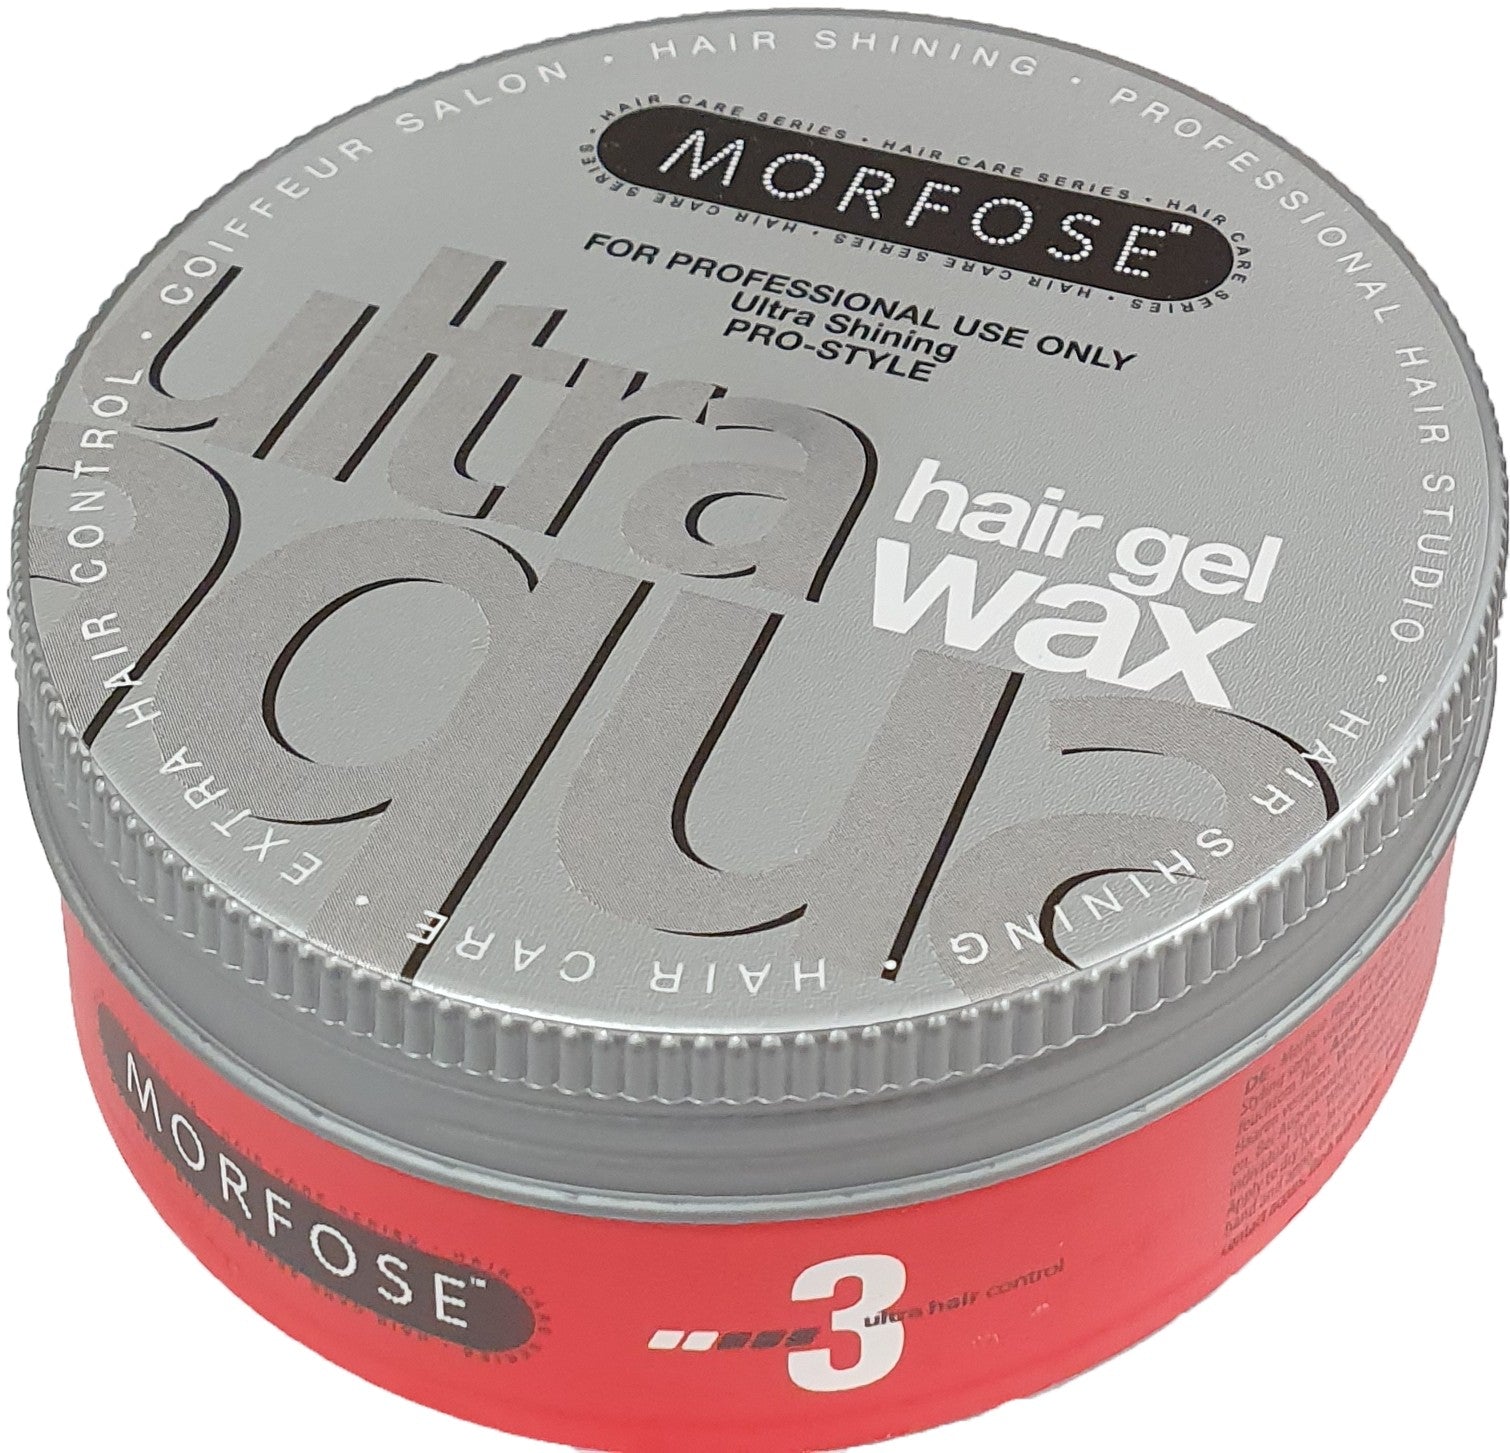 MORFOSE OSSION MATTE, ULTRA & EXTRA Aqua Hair Shine Gel Wax - 175ml - 4  Choices!